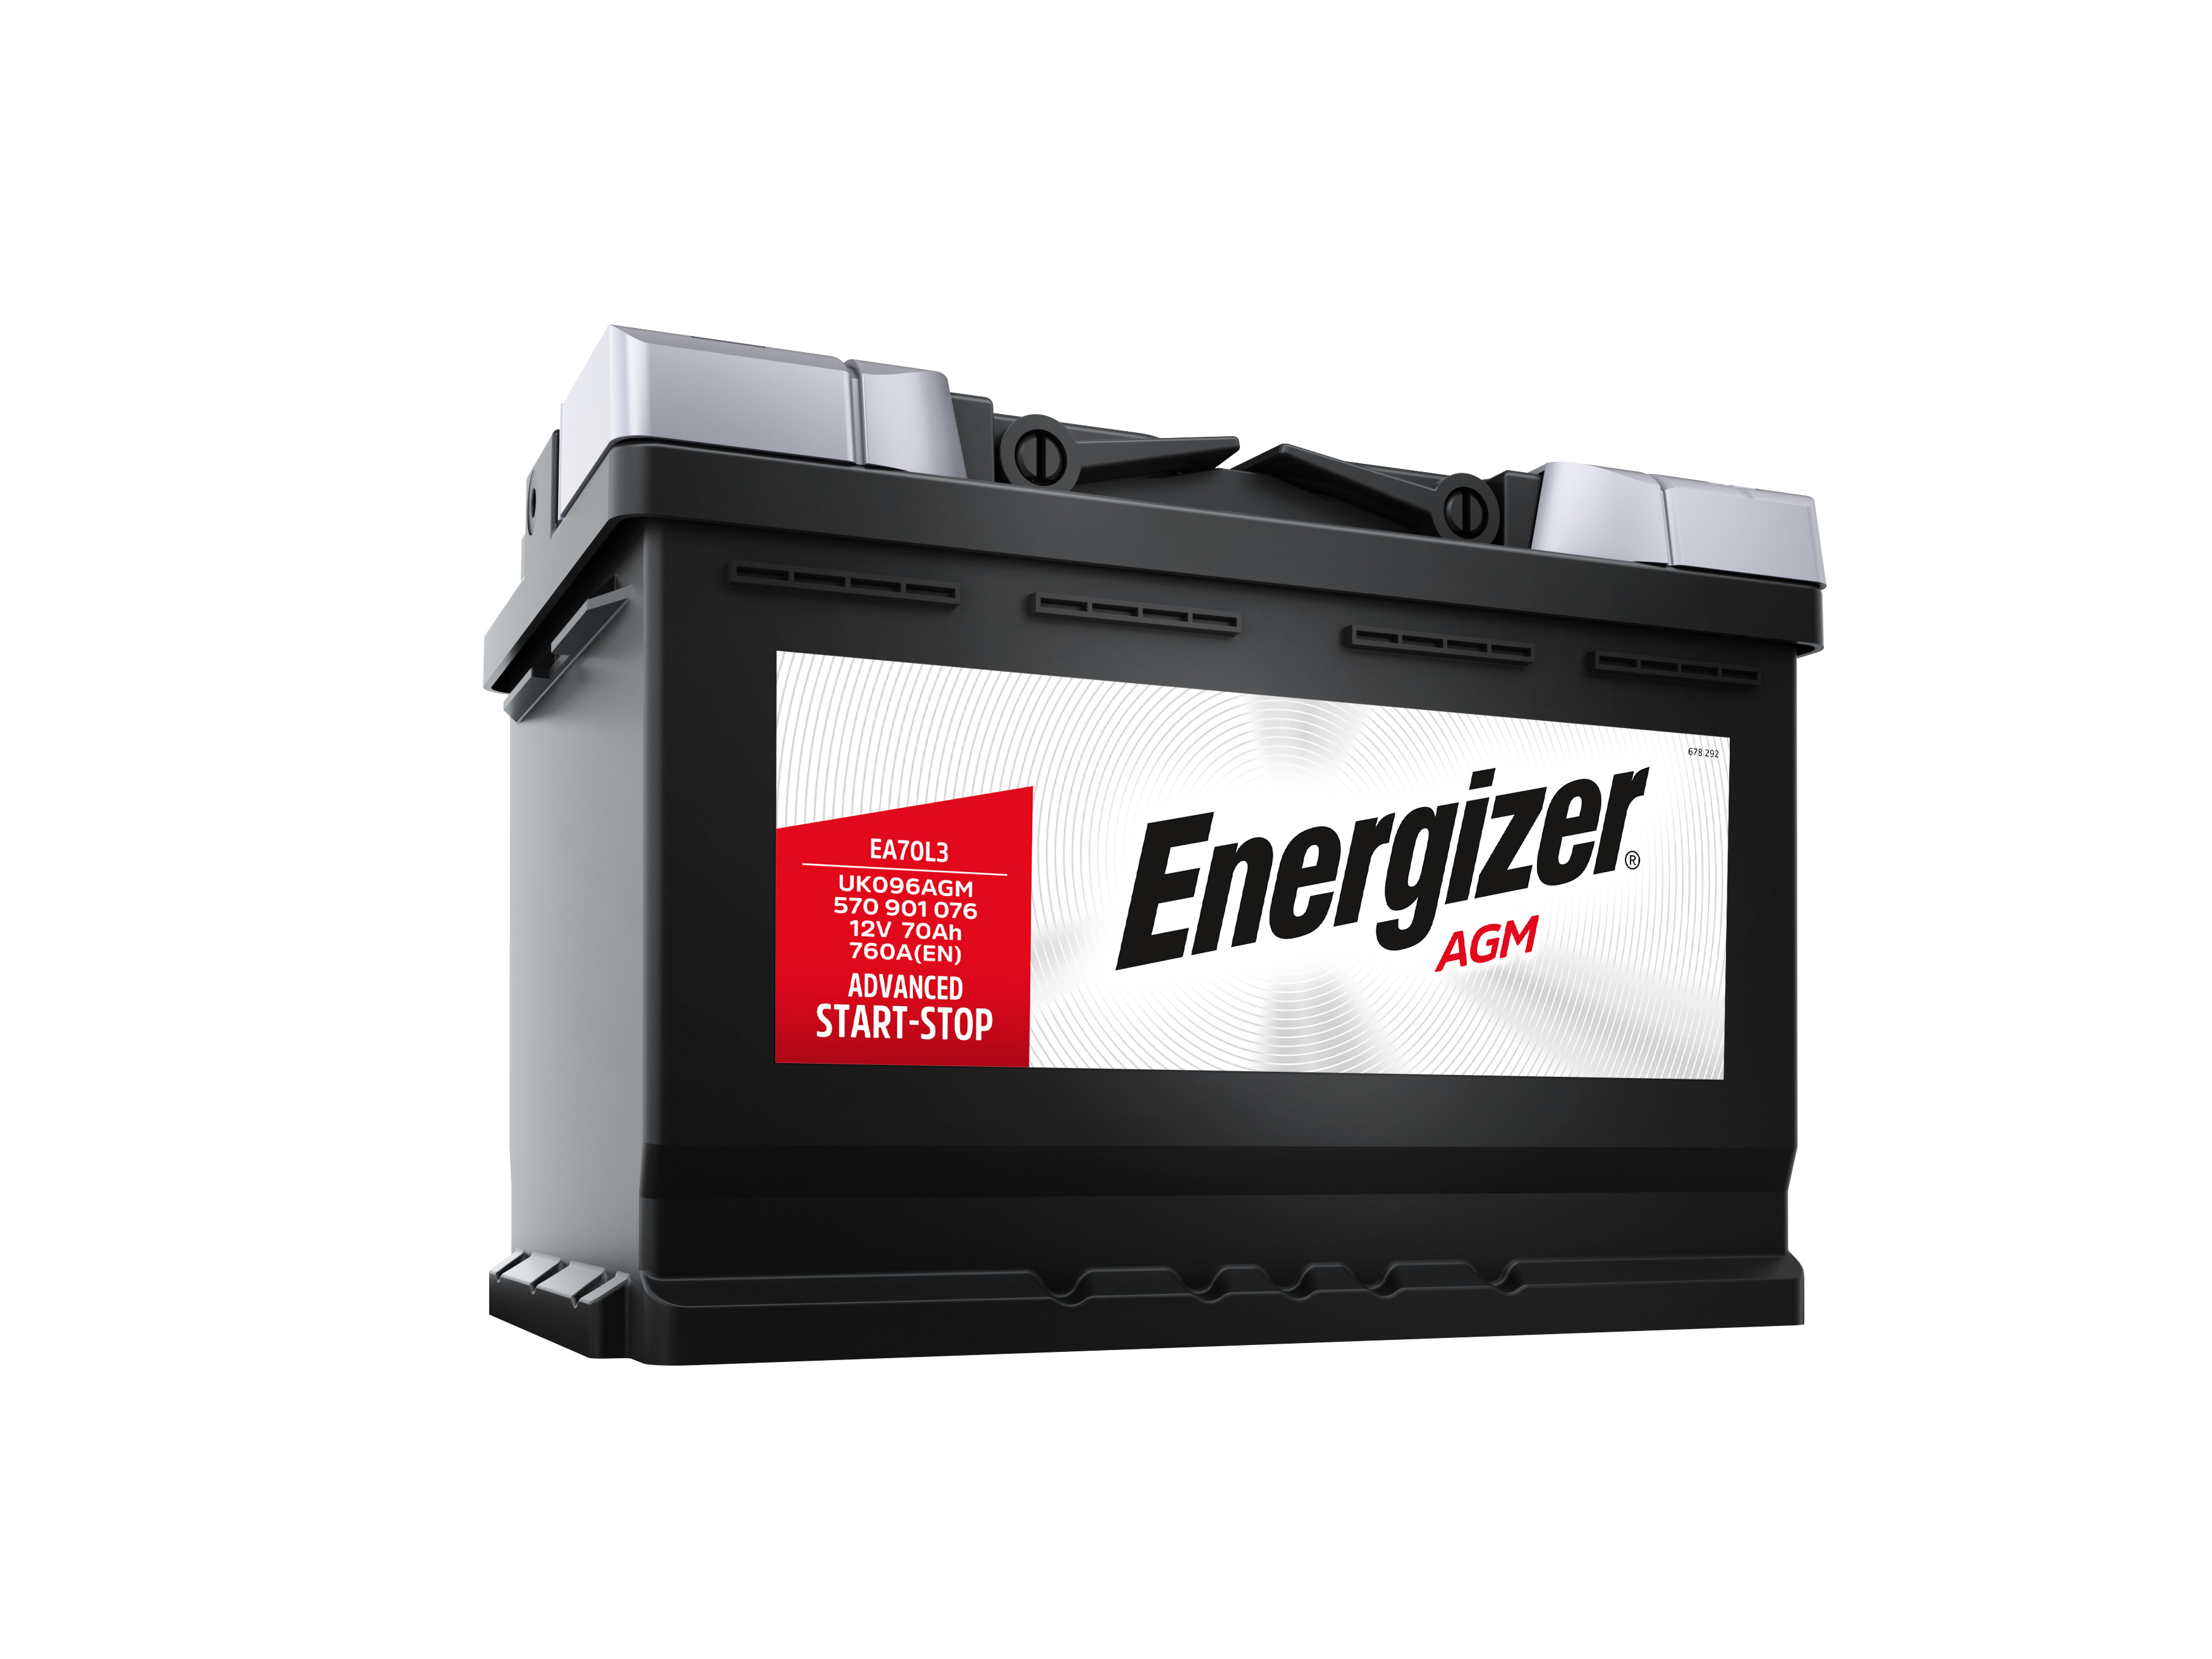 https://www.energizerautomotivebatteries.com/fileadmin/images/products/570901076_h6_energizer_premium_agm.jpg